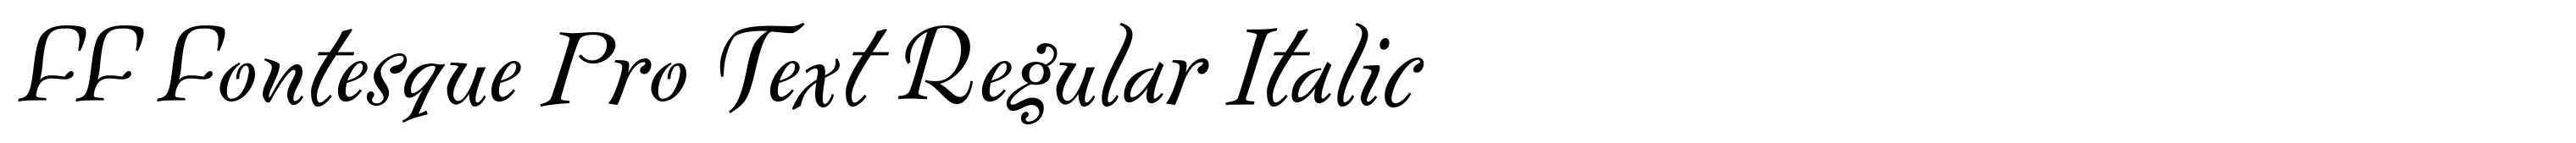 FF Fontesque Pro Text Regular Italic